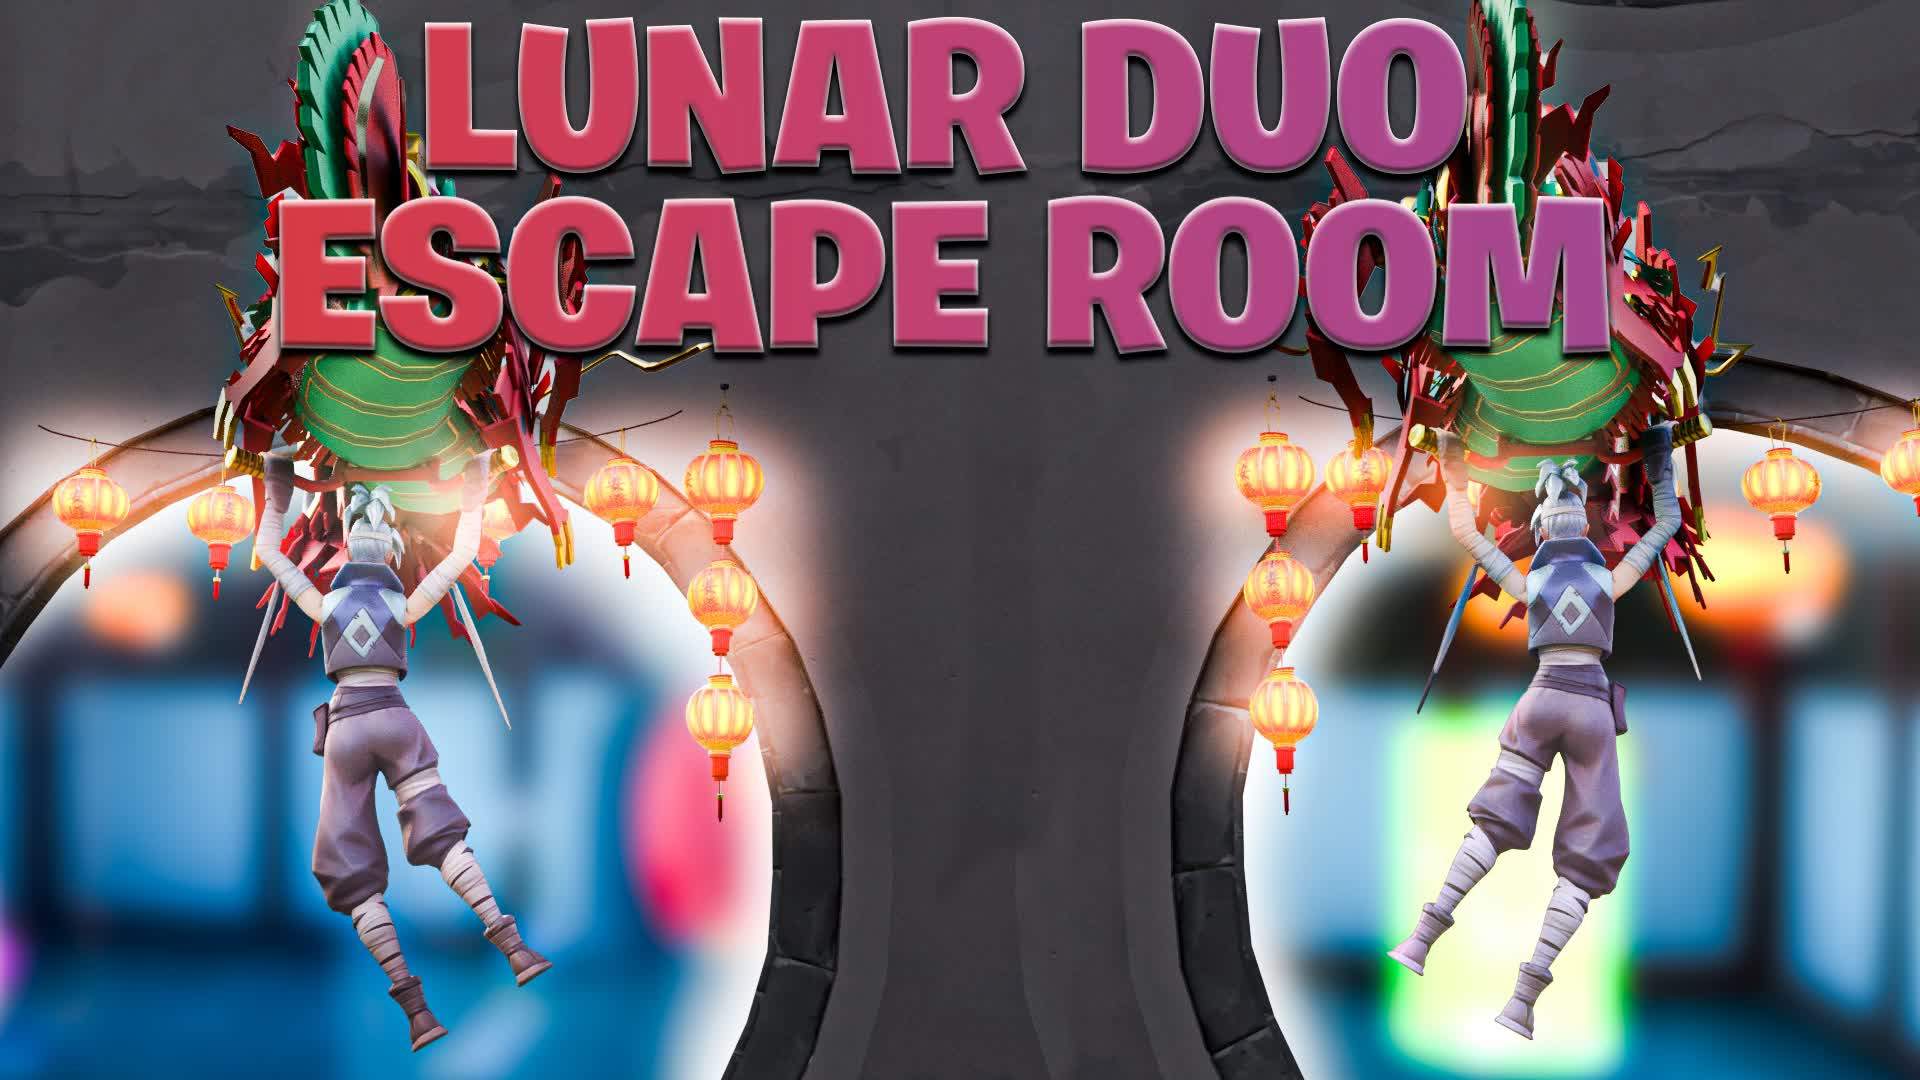 Lunar duo escape room